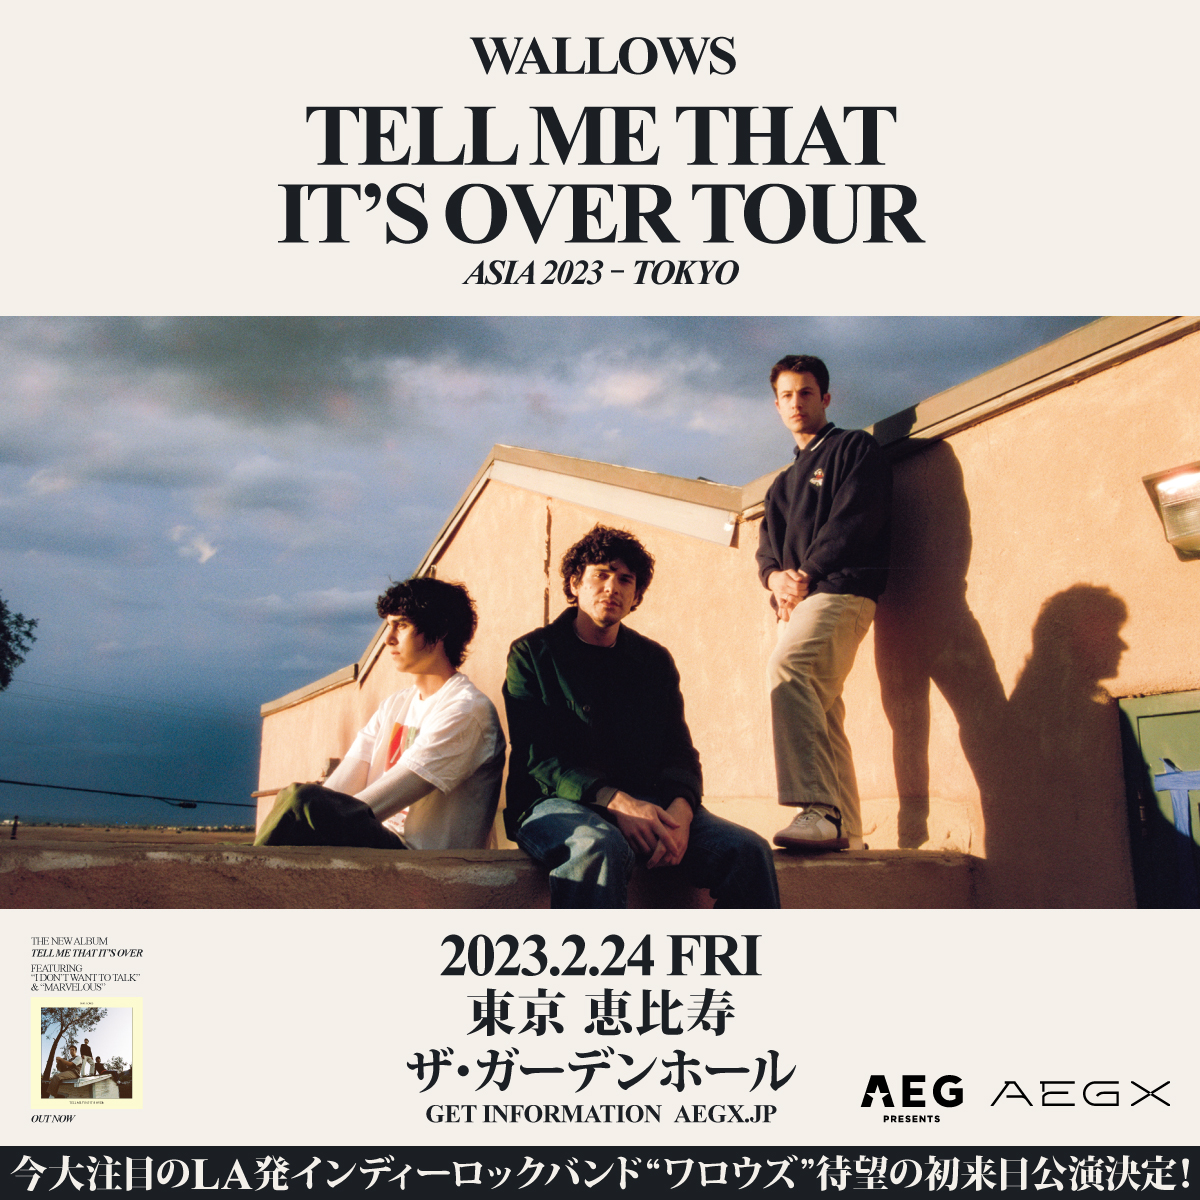 WALLOWS TELL ME THAT IT'S OVER ASIA TOUR 2023 TOKYO